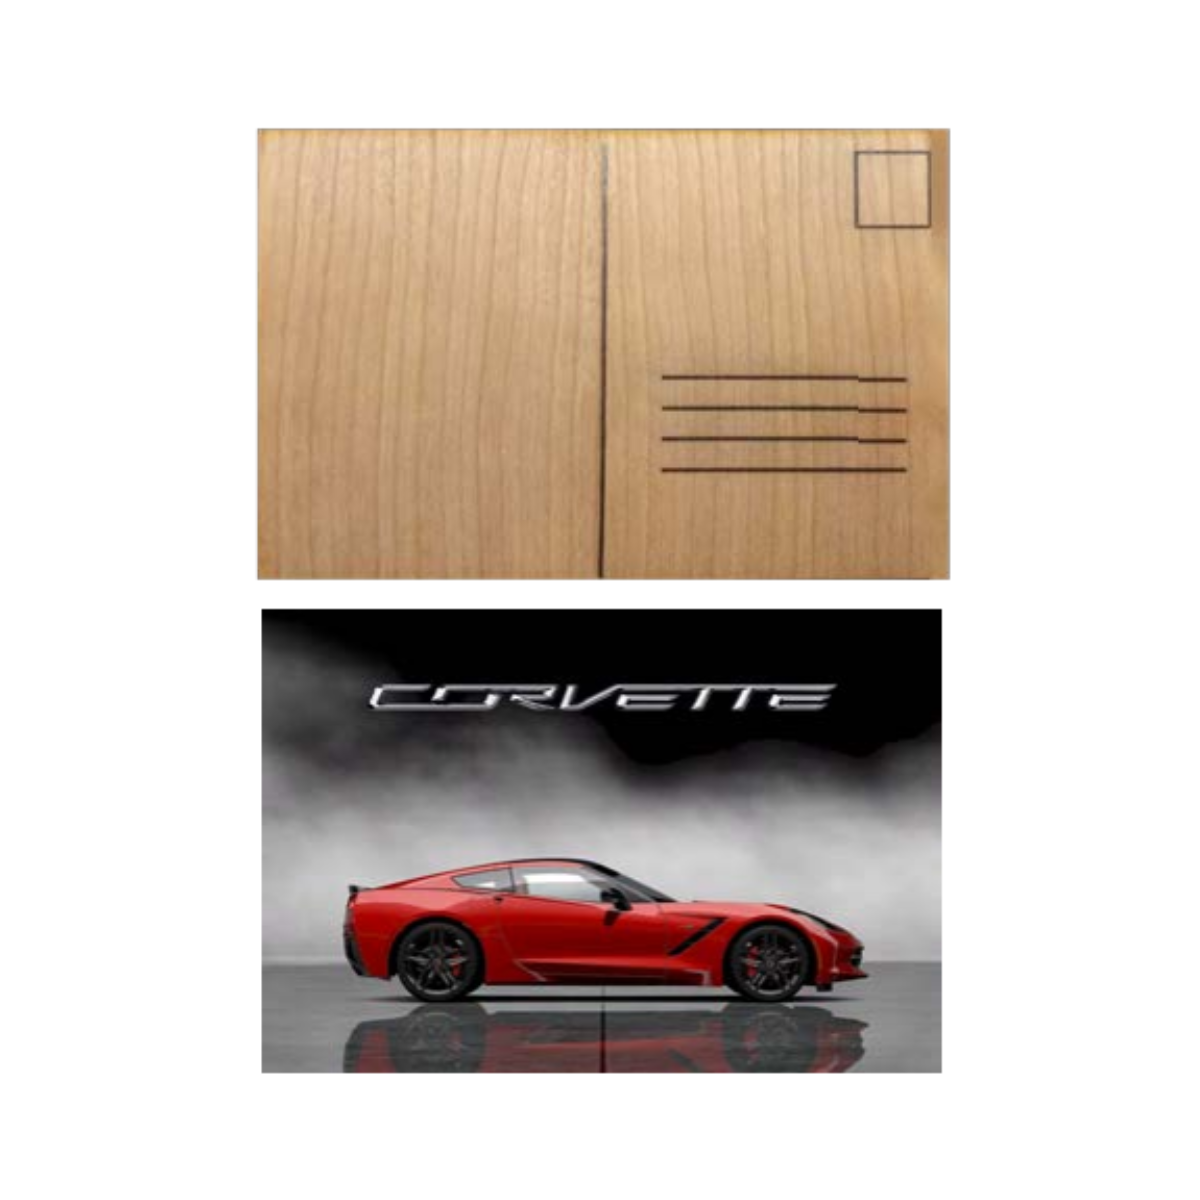 2014 Corvette Wooden Postcard